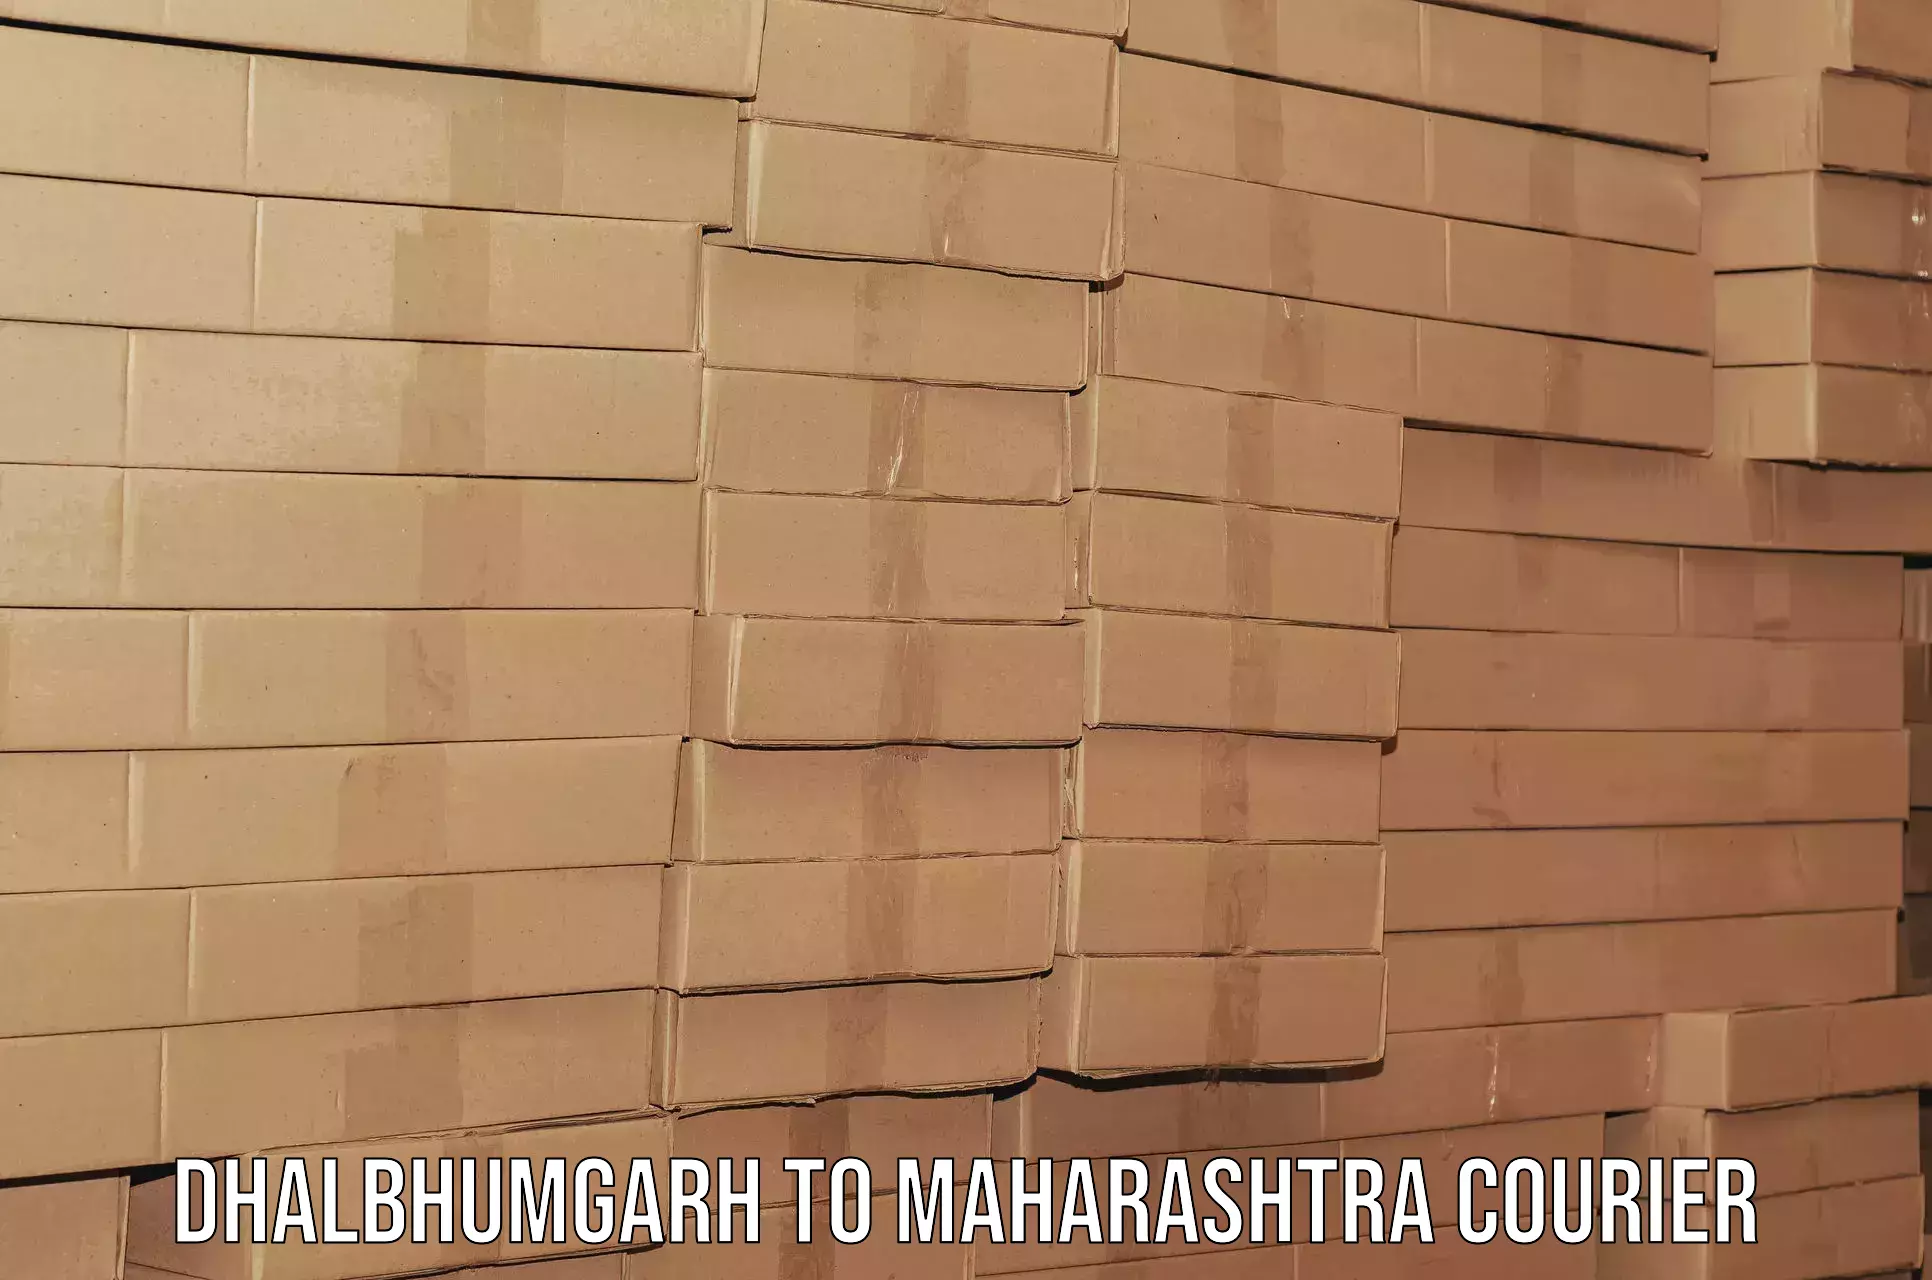 Specialized moving company Dhalbhumgarh to IIT Mumbai